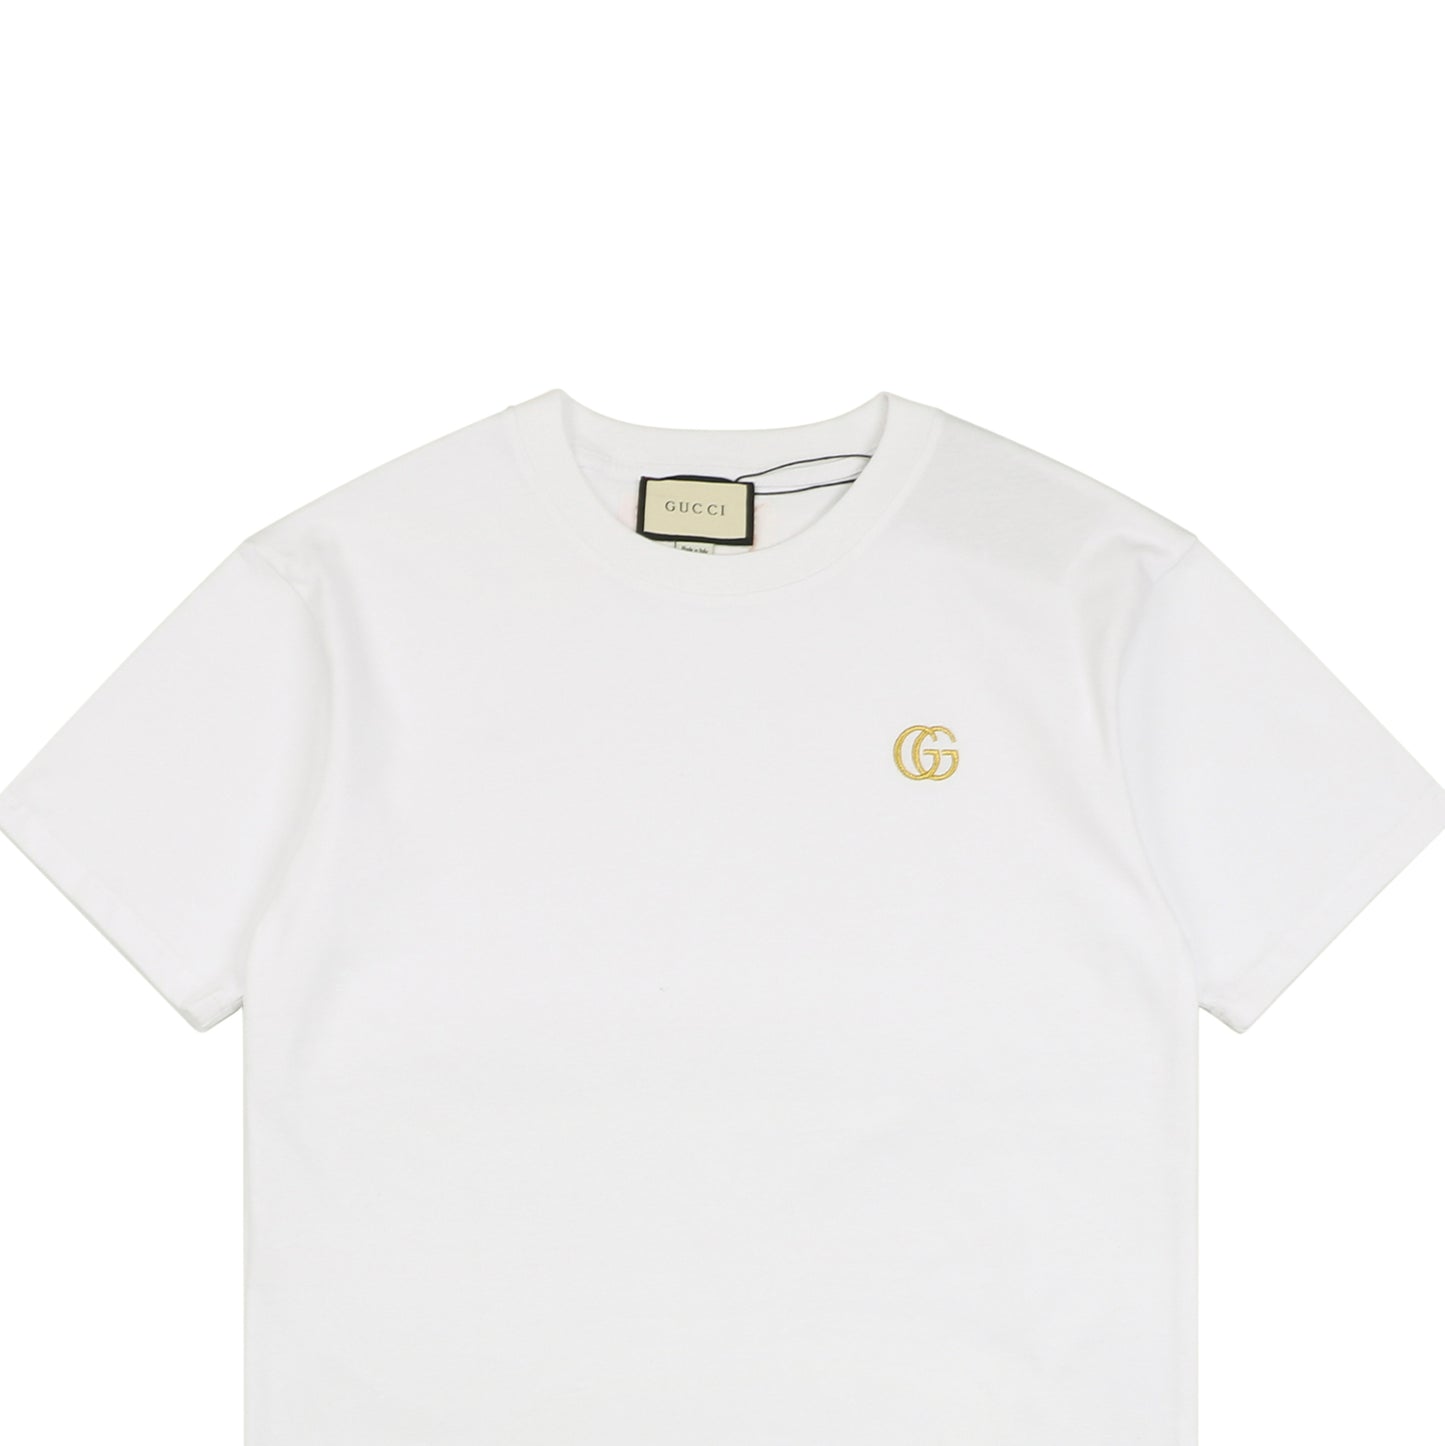 Gucc1 Small Gold T-Shirt White